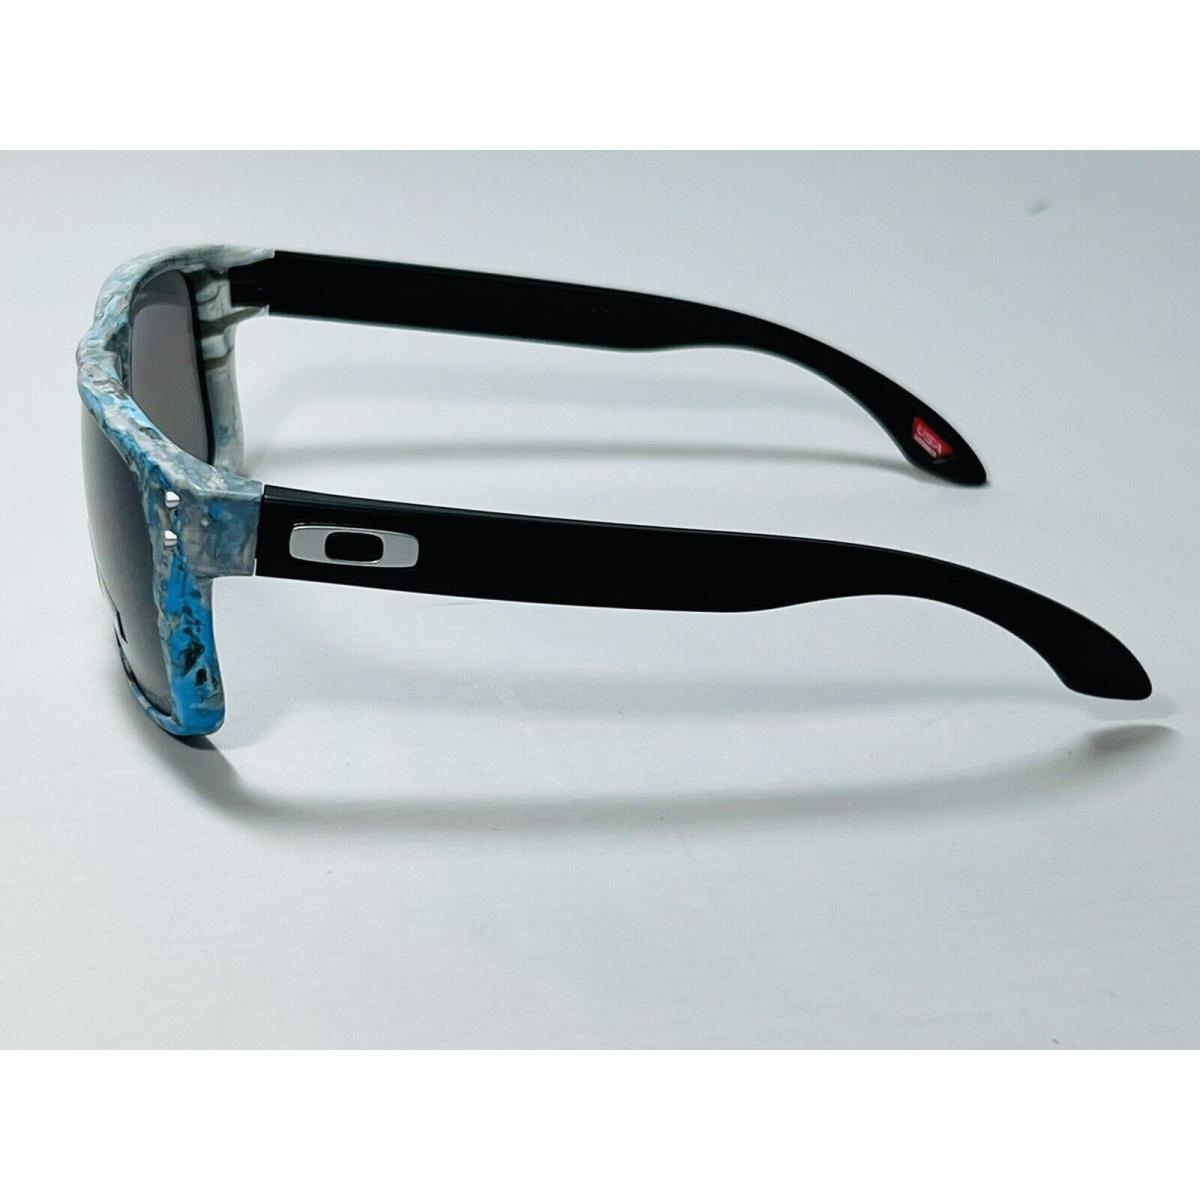 Oakley Holbrook XS Sunglasses Youth Sanctuary Swirl Polarized Grey Prizm |  700285624464 - Oakley sunglasses Holbrook - Sanctuary Swirl Frame, Gray  Lens | Fash Direct